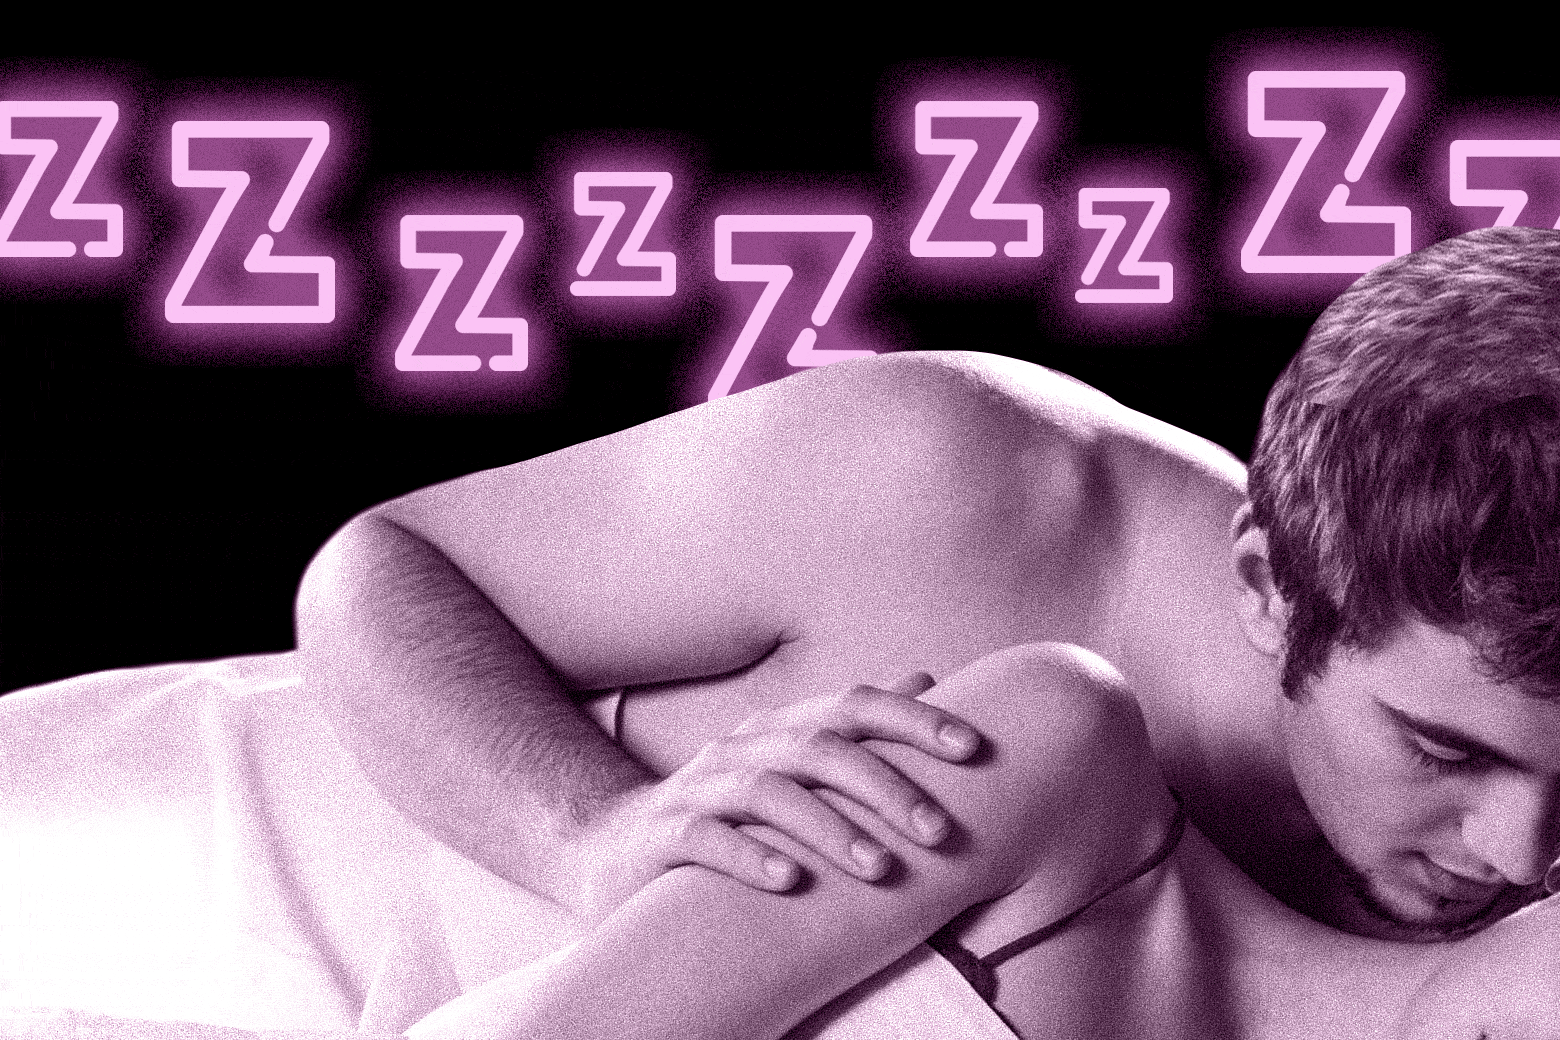 how to fuck girlfriend while asleep